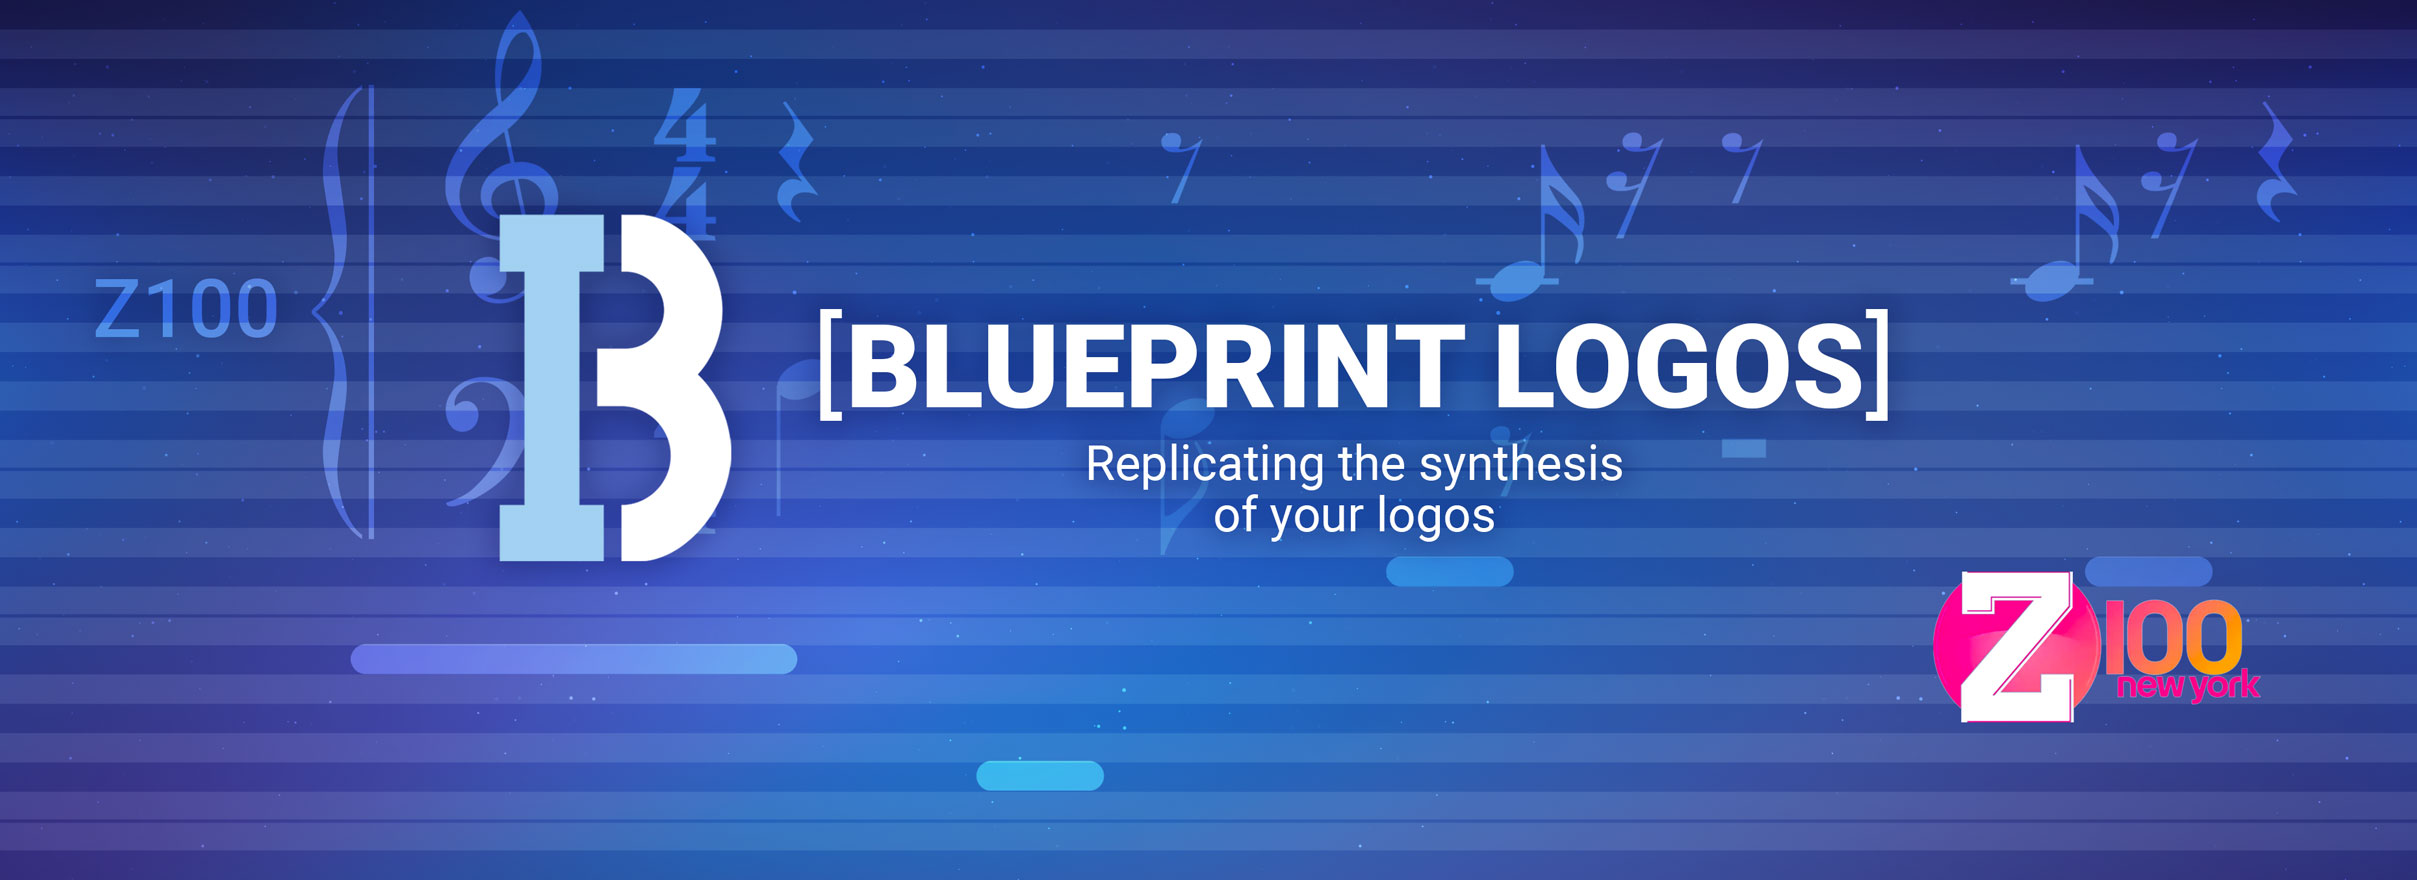 Blueprint Logos: Replicating the synthesis of your logos - Z100 New York